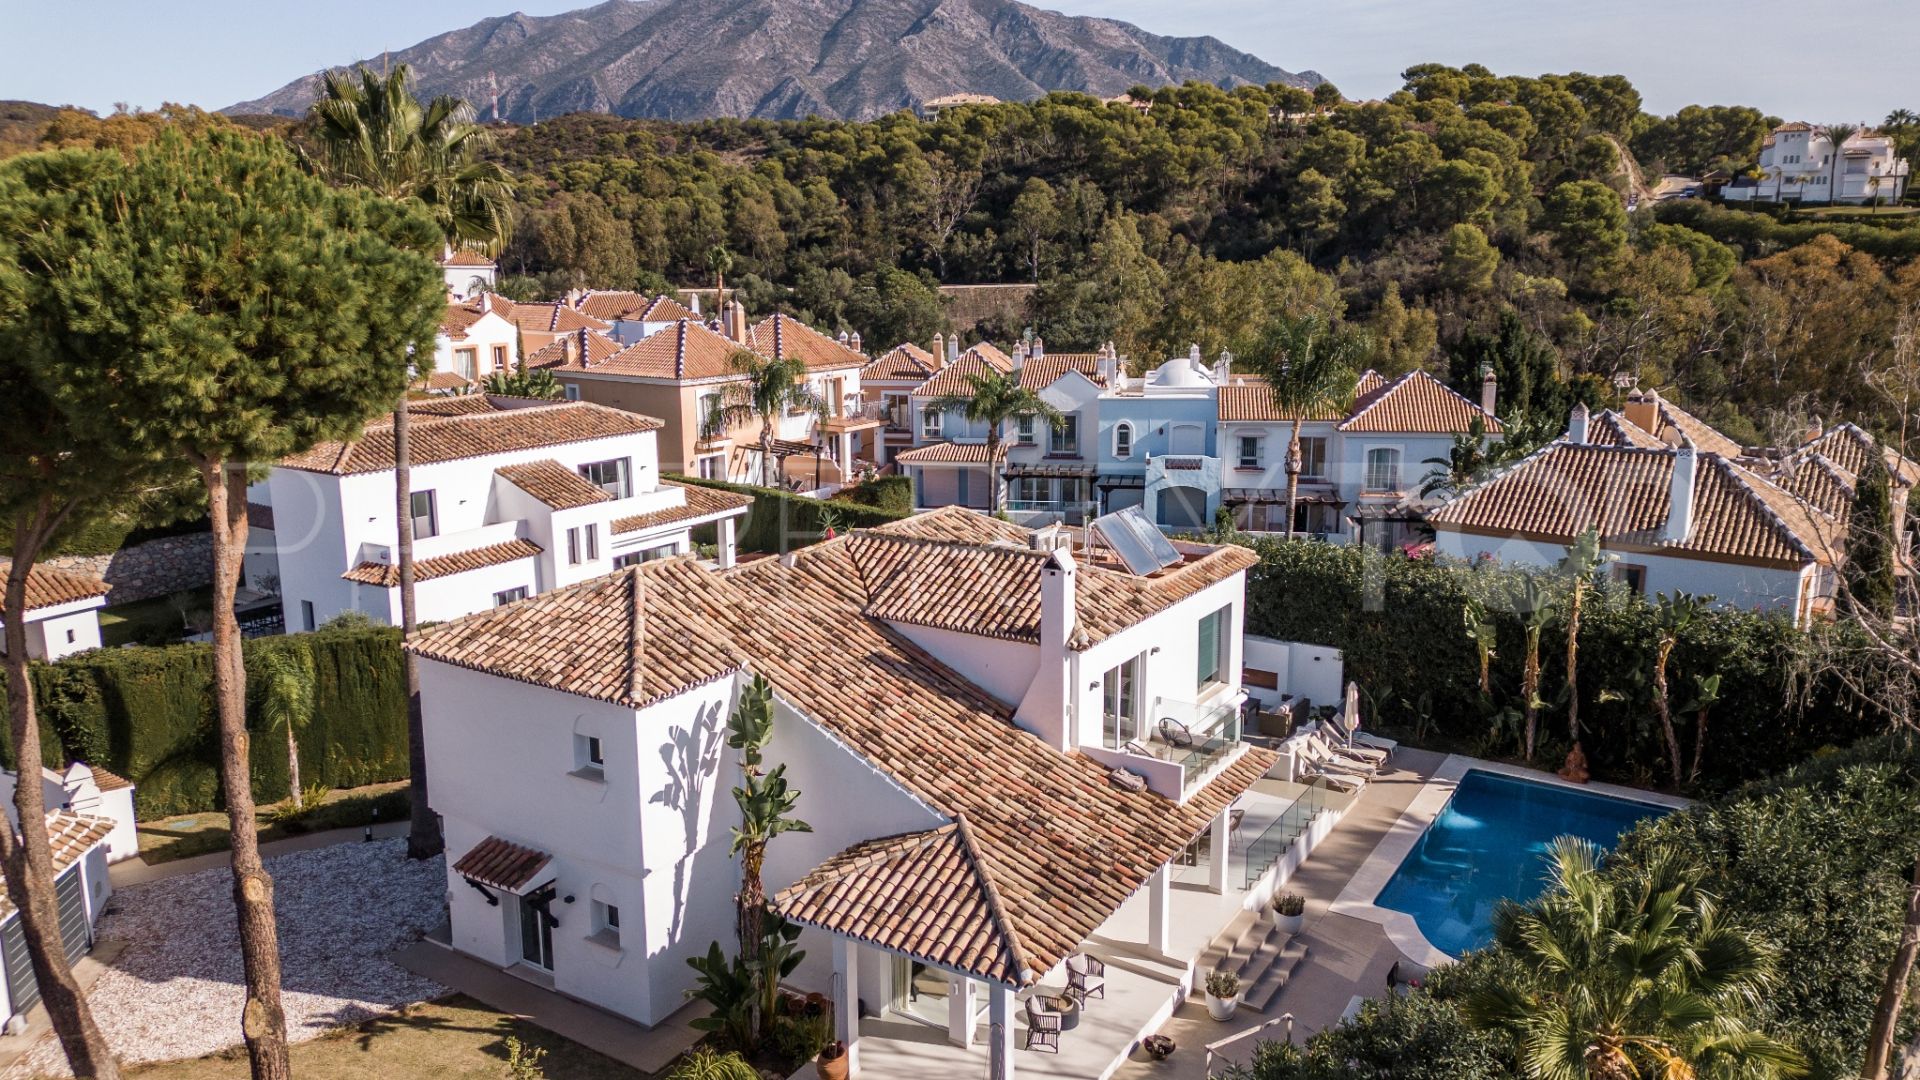 4 bedrooms villa in Marbella Country Club for sale